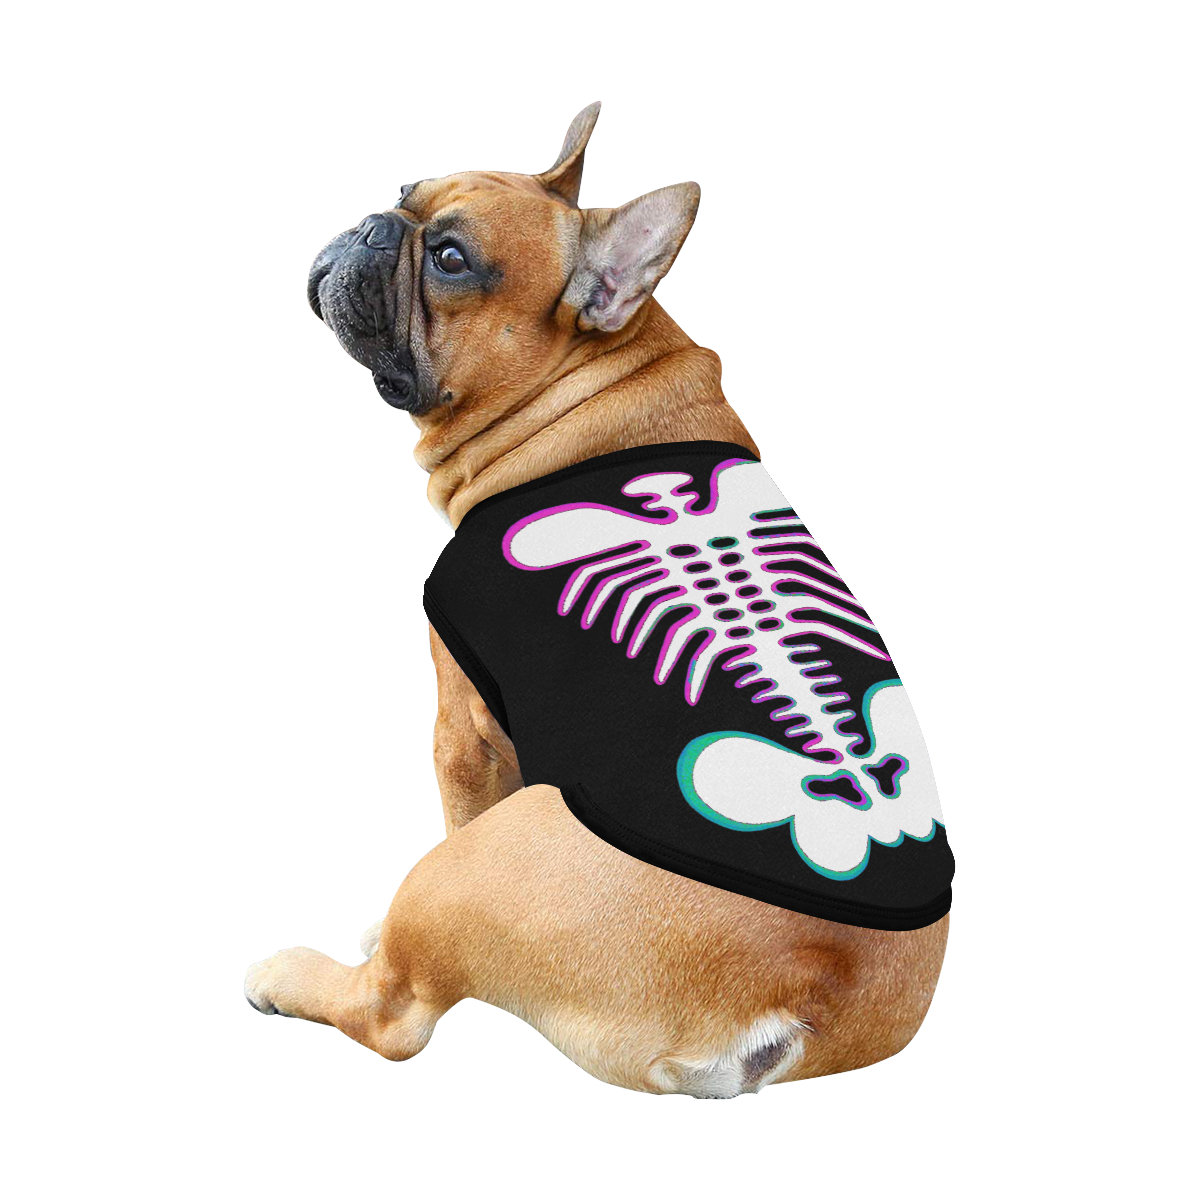 Halloween, Costume, Dog Skeleton, Dog Tank Top, Dog shirt, Dog t-shirt, Dog clothes, Gift, 7 sizes XS to 3XL, pink, teal, black